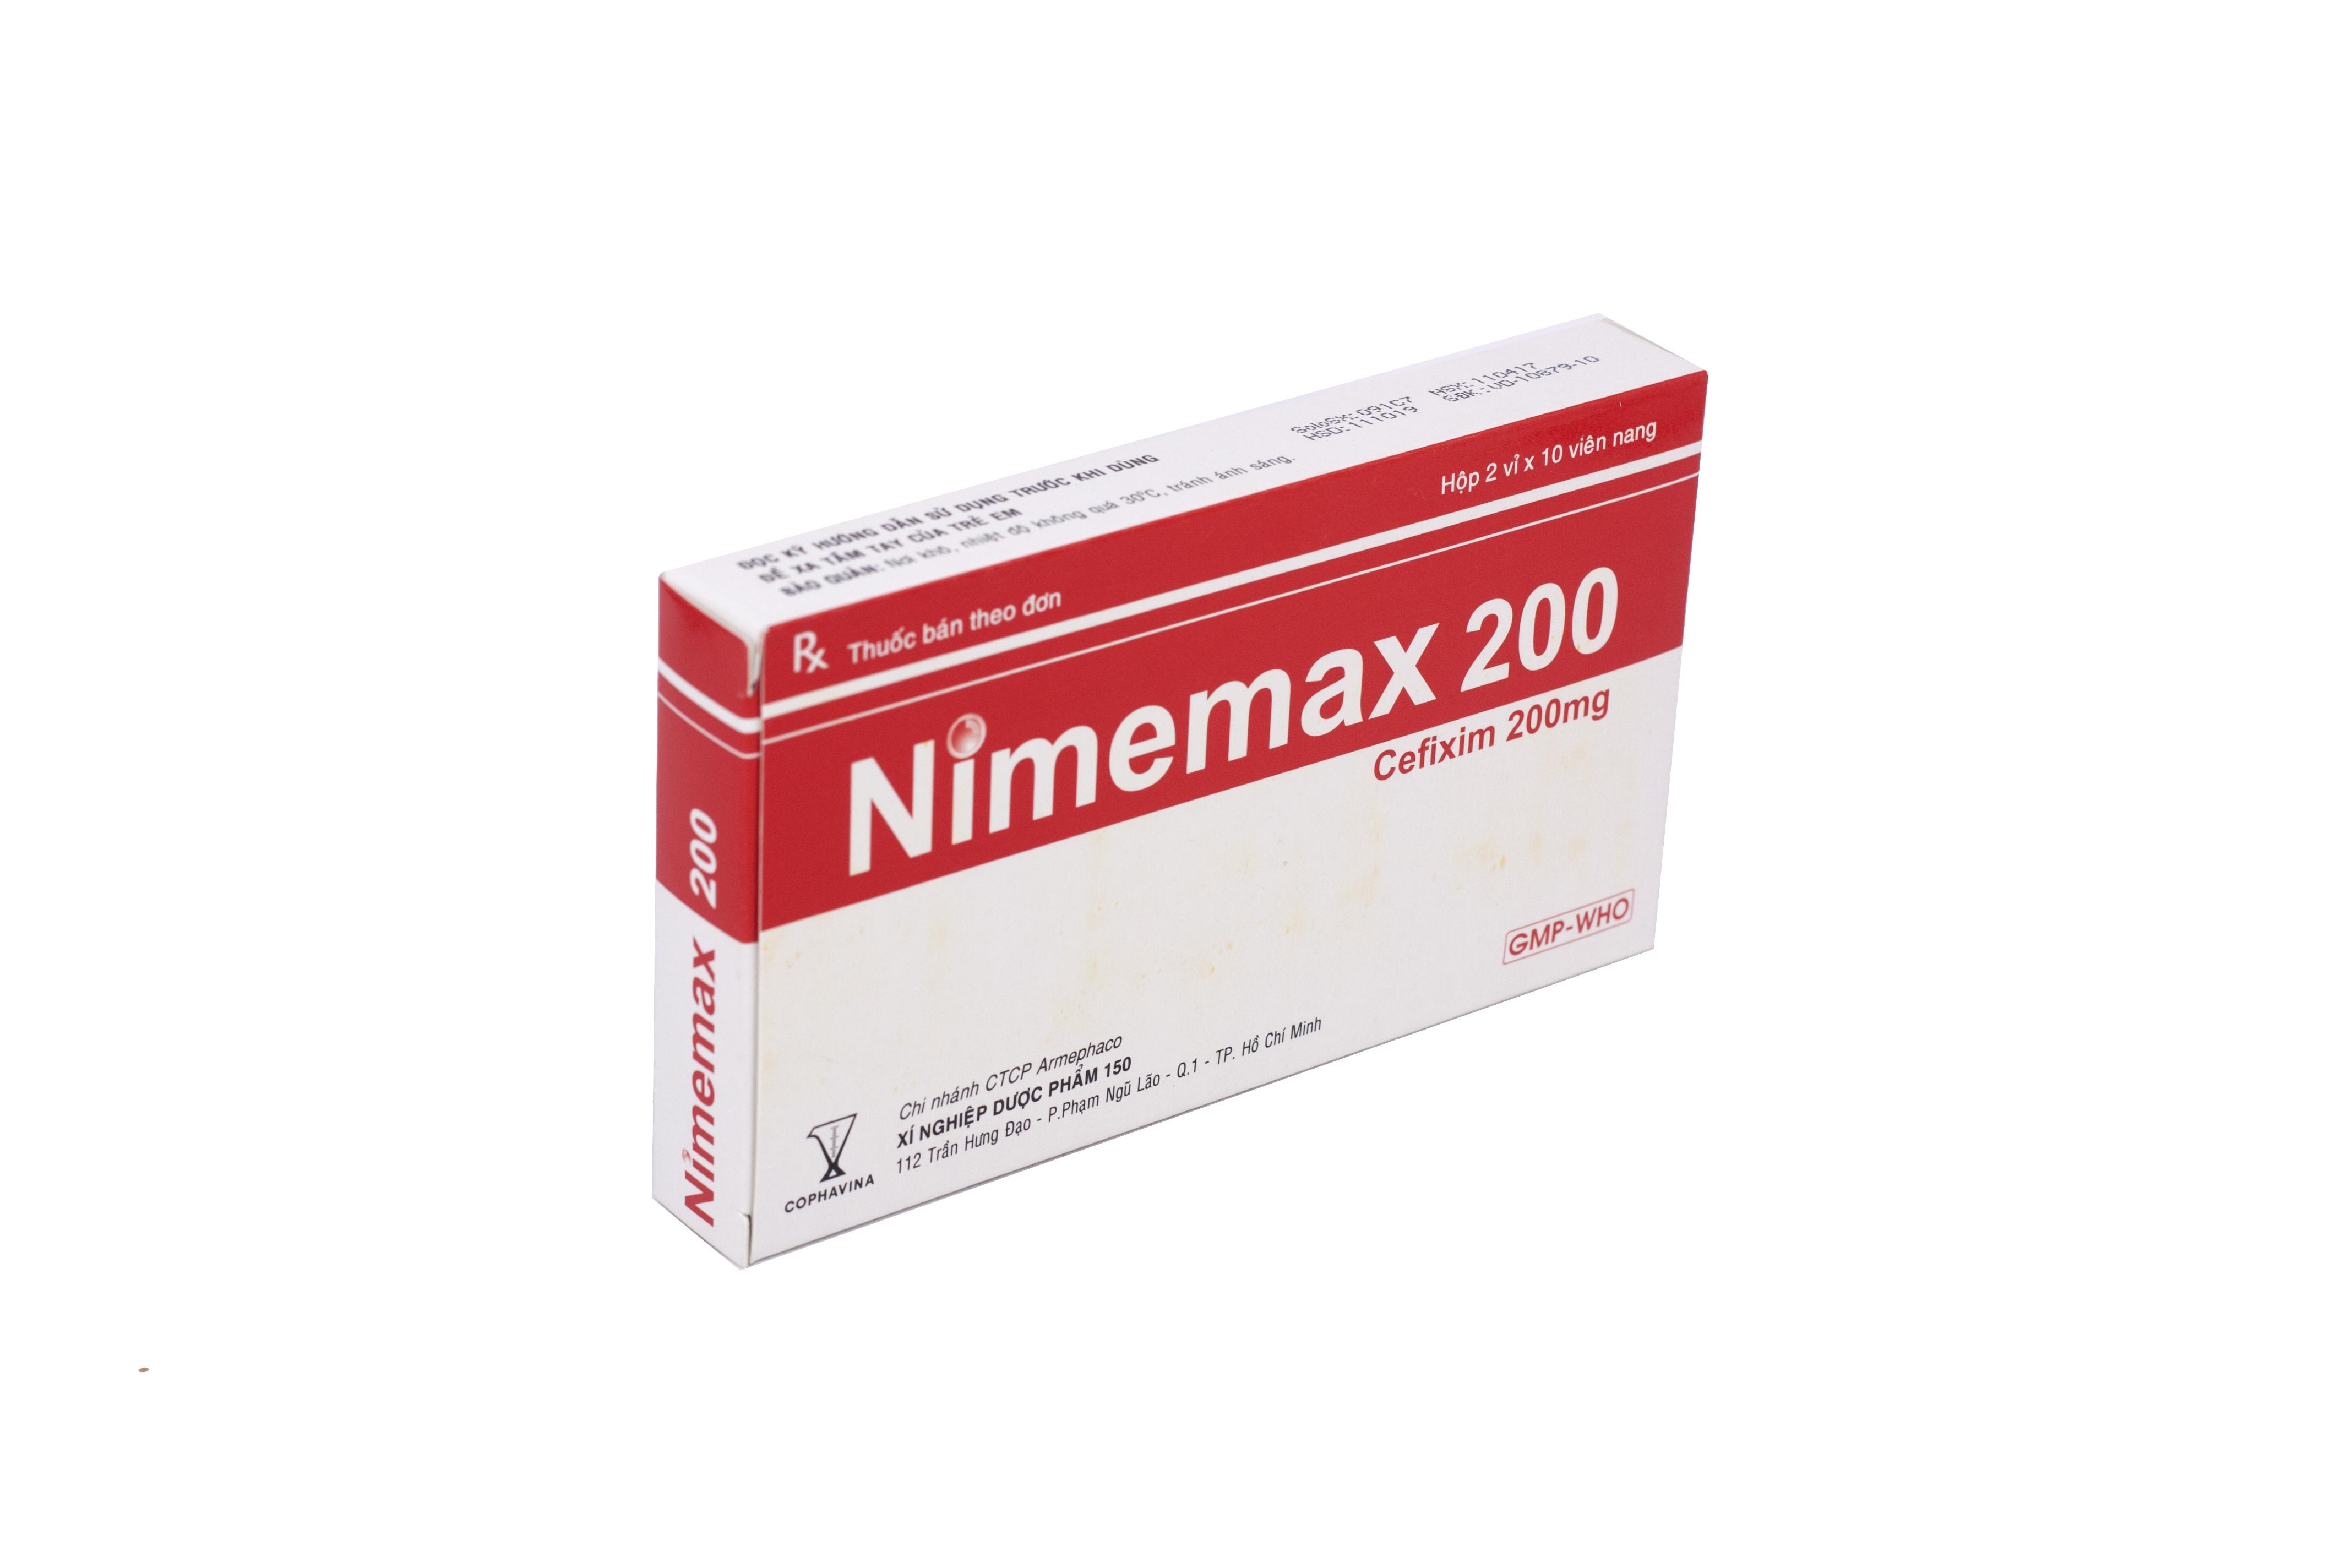 Nimemax 200 (Cefixim) Armephaco (H/20v)